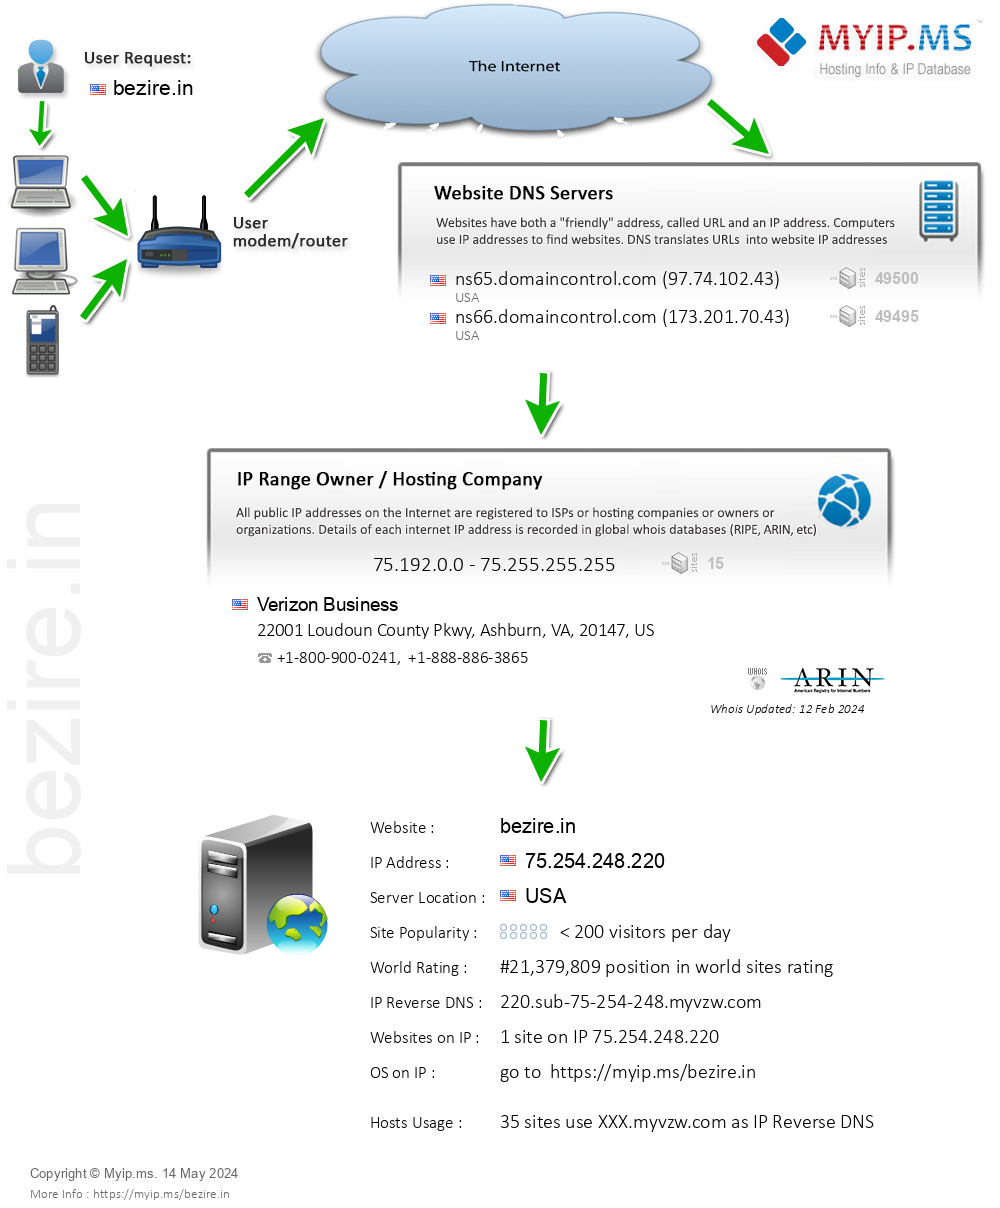 Bezire.in - Website Hosting Visual IP Diagram